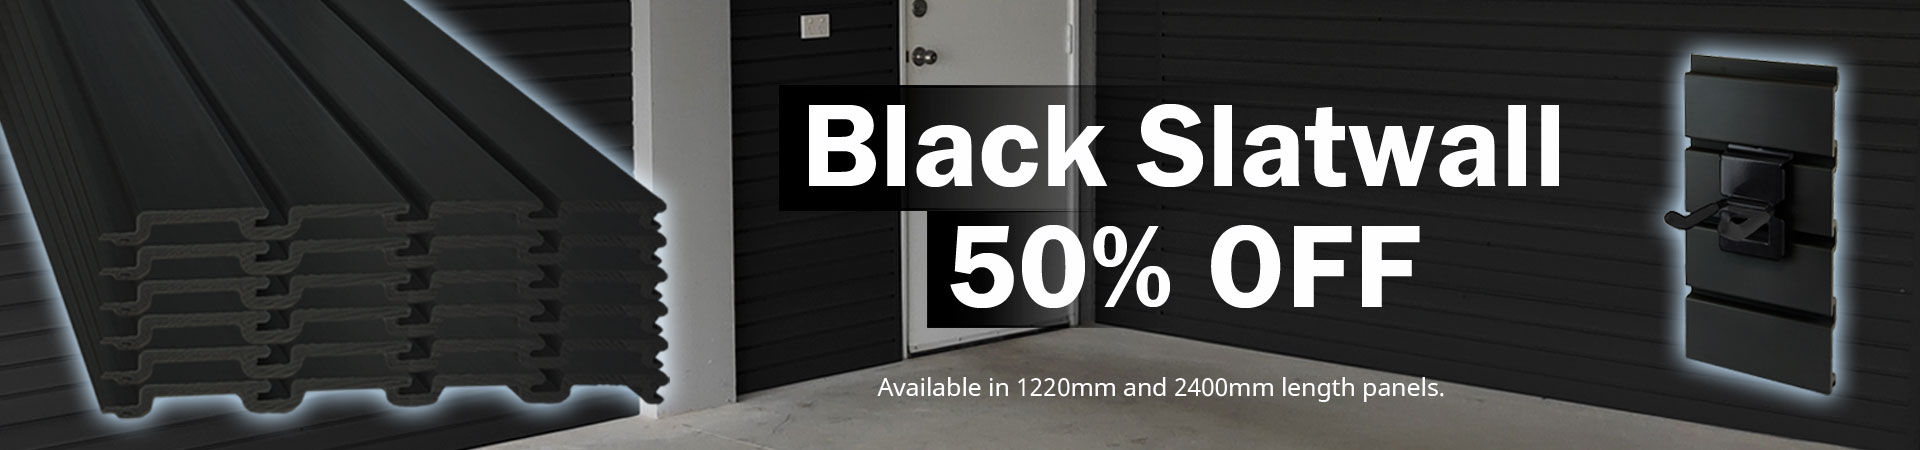 BLACK Slatwall Panels NOW 50% OFF!